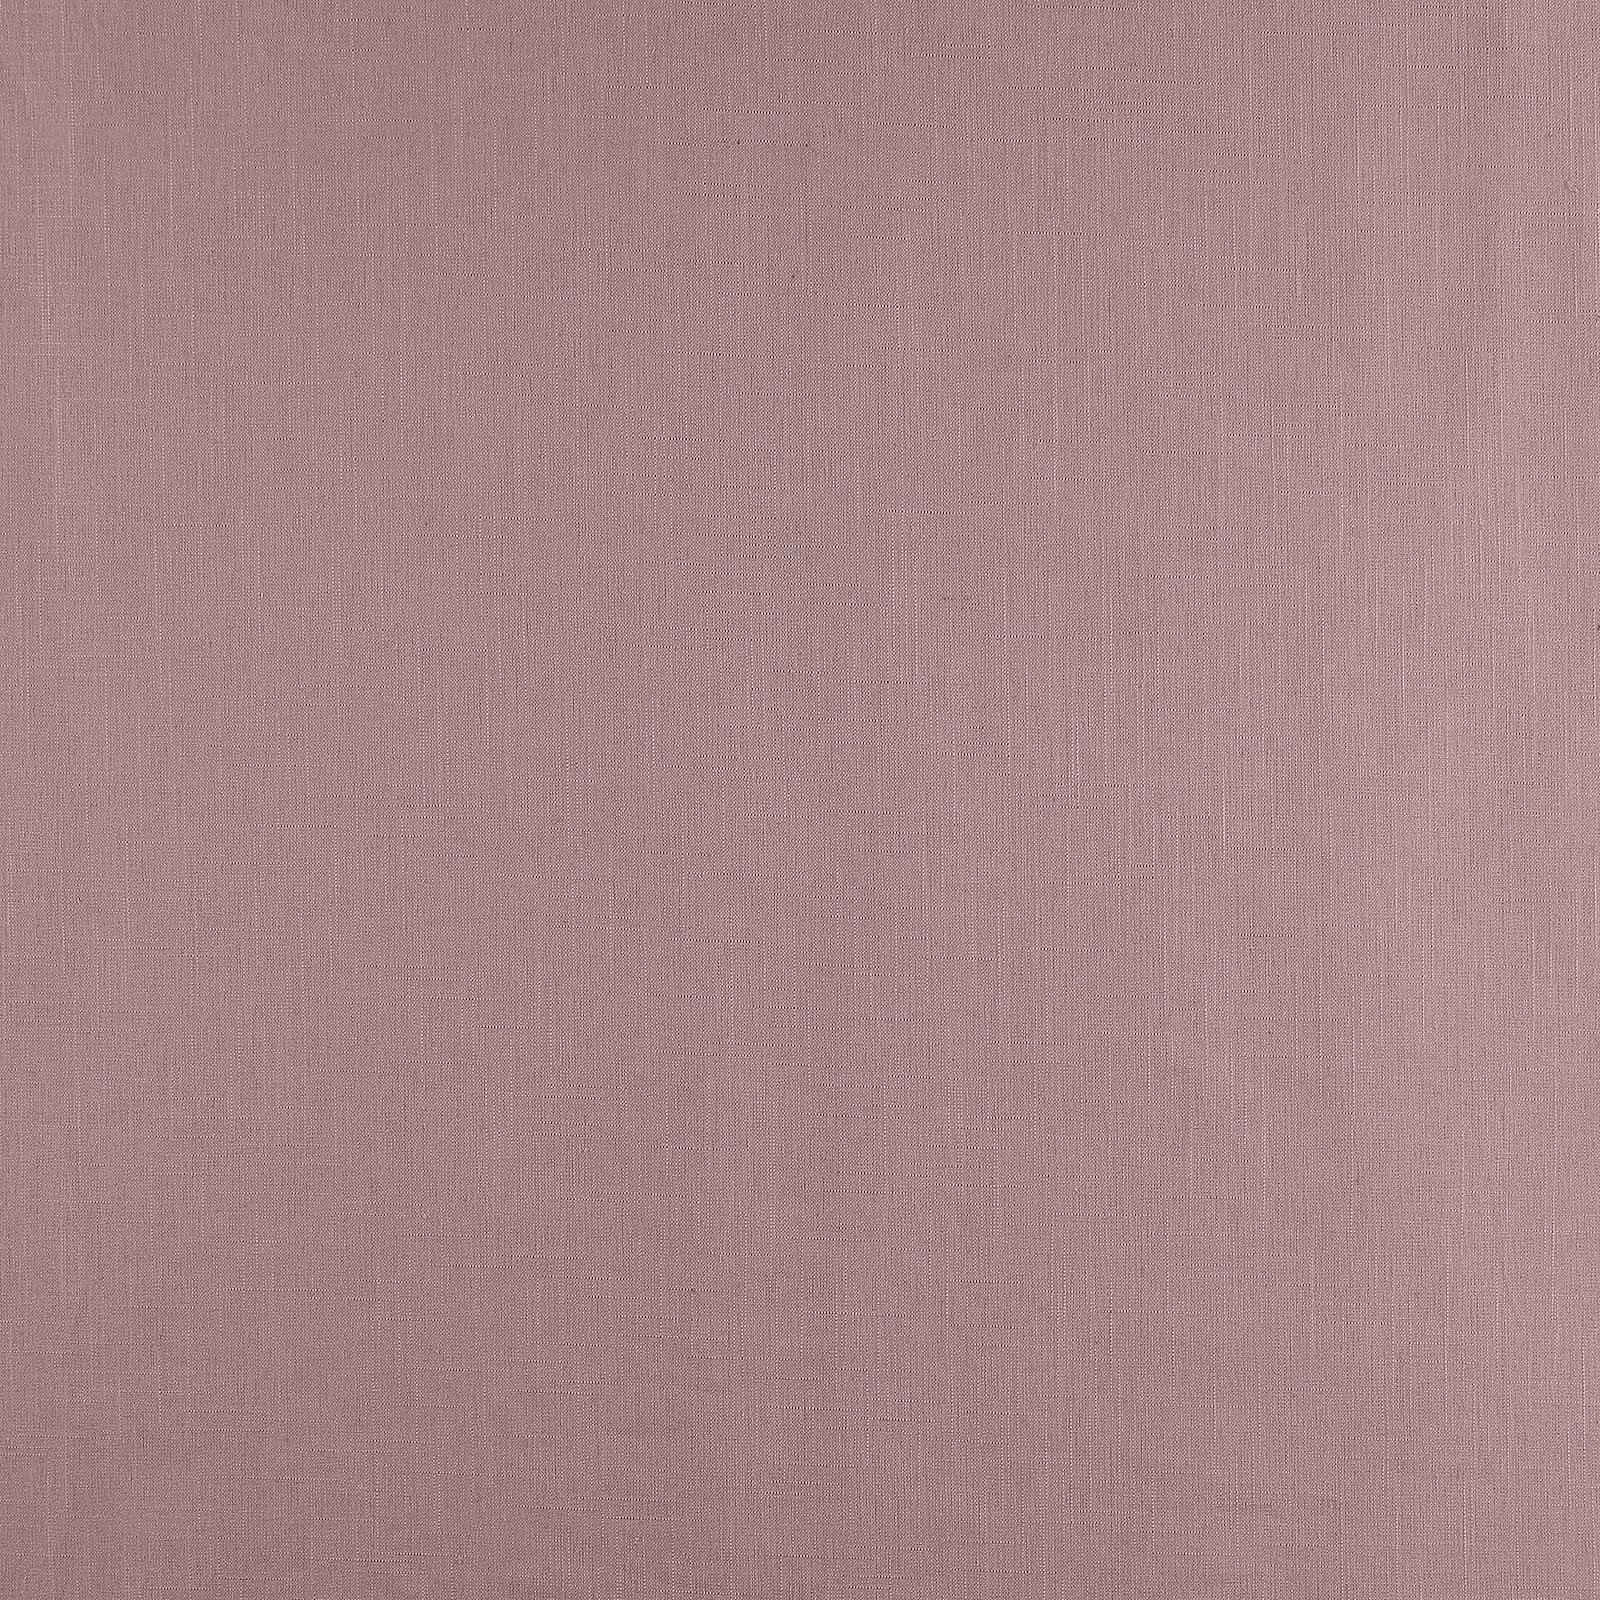 Coarse linen/viscose purple 852391_pack_solid